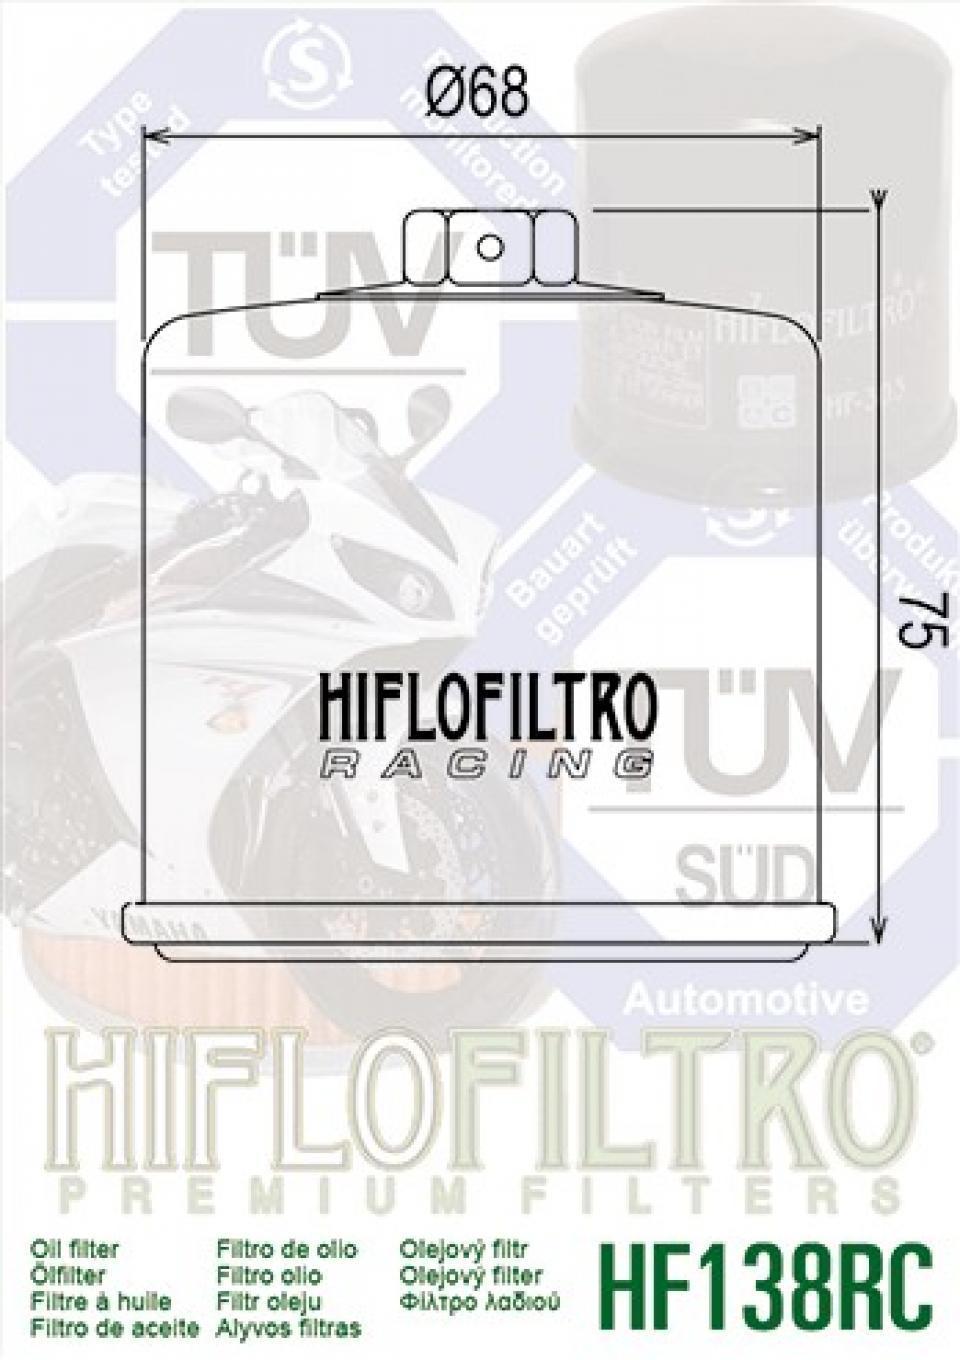 Filtre à huile Hiflofiltro pour Moto Suzuki 600 Gsx-R 1997 à 2017 HF138RC Neuf